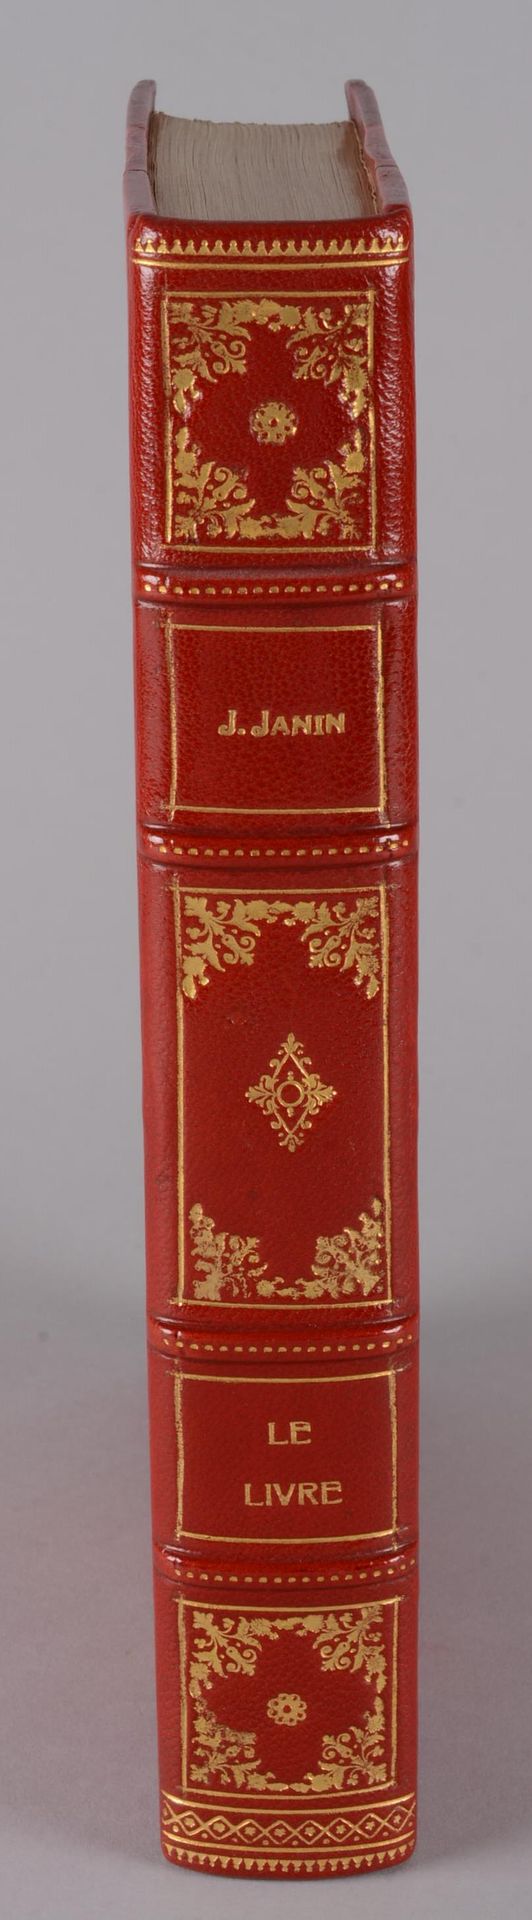 JANIN Jules JANIN Jules 



El Libro



 París, Plon, 1870



 Large in-8°. Medi&hellip;